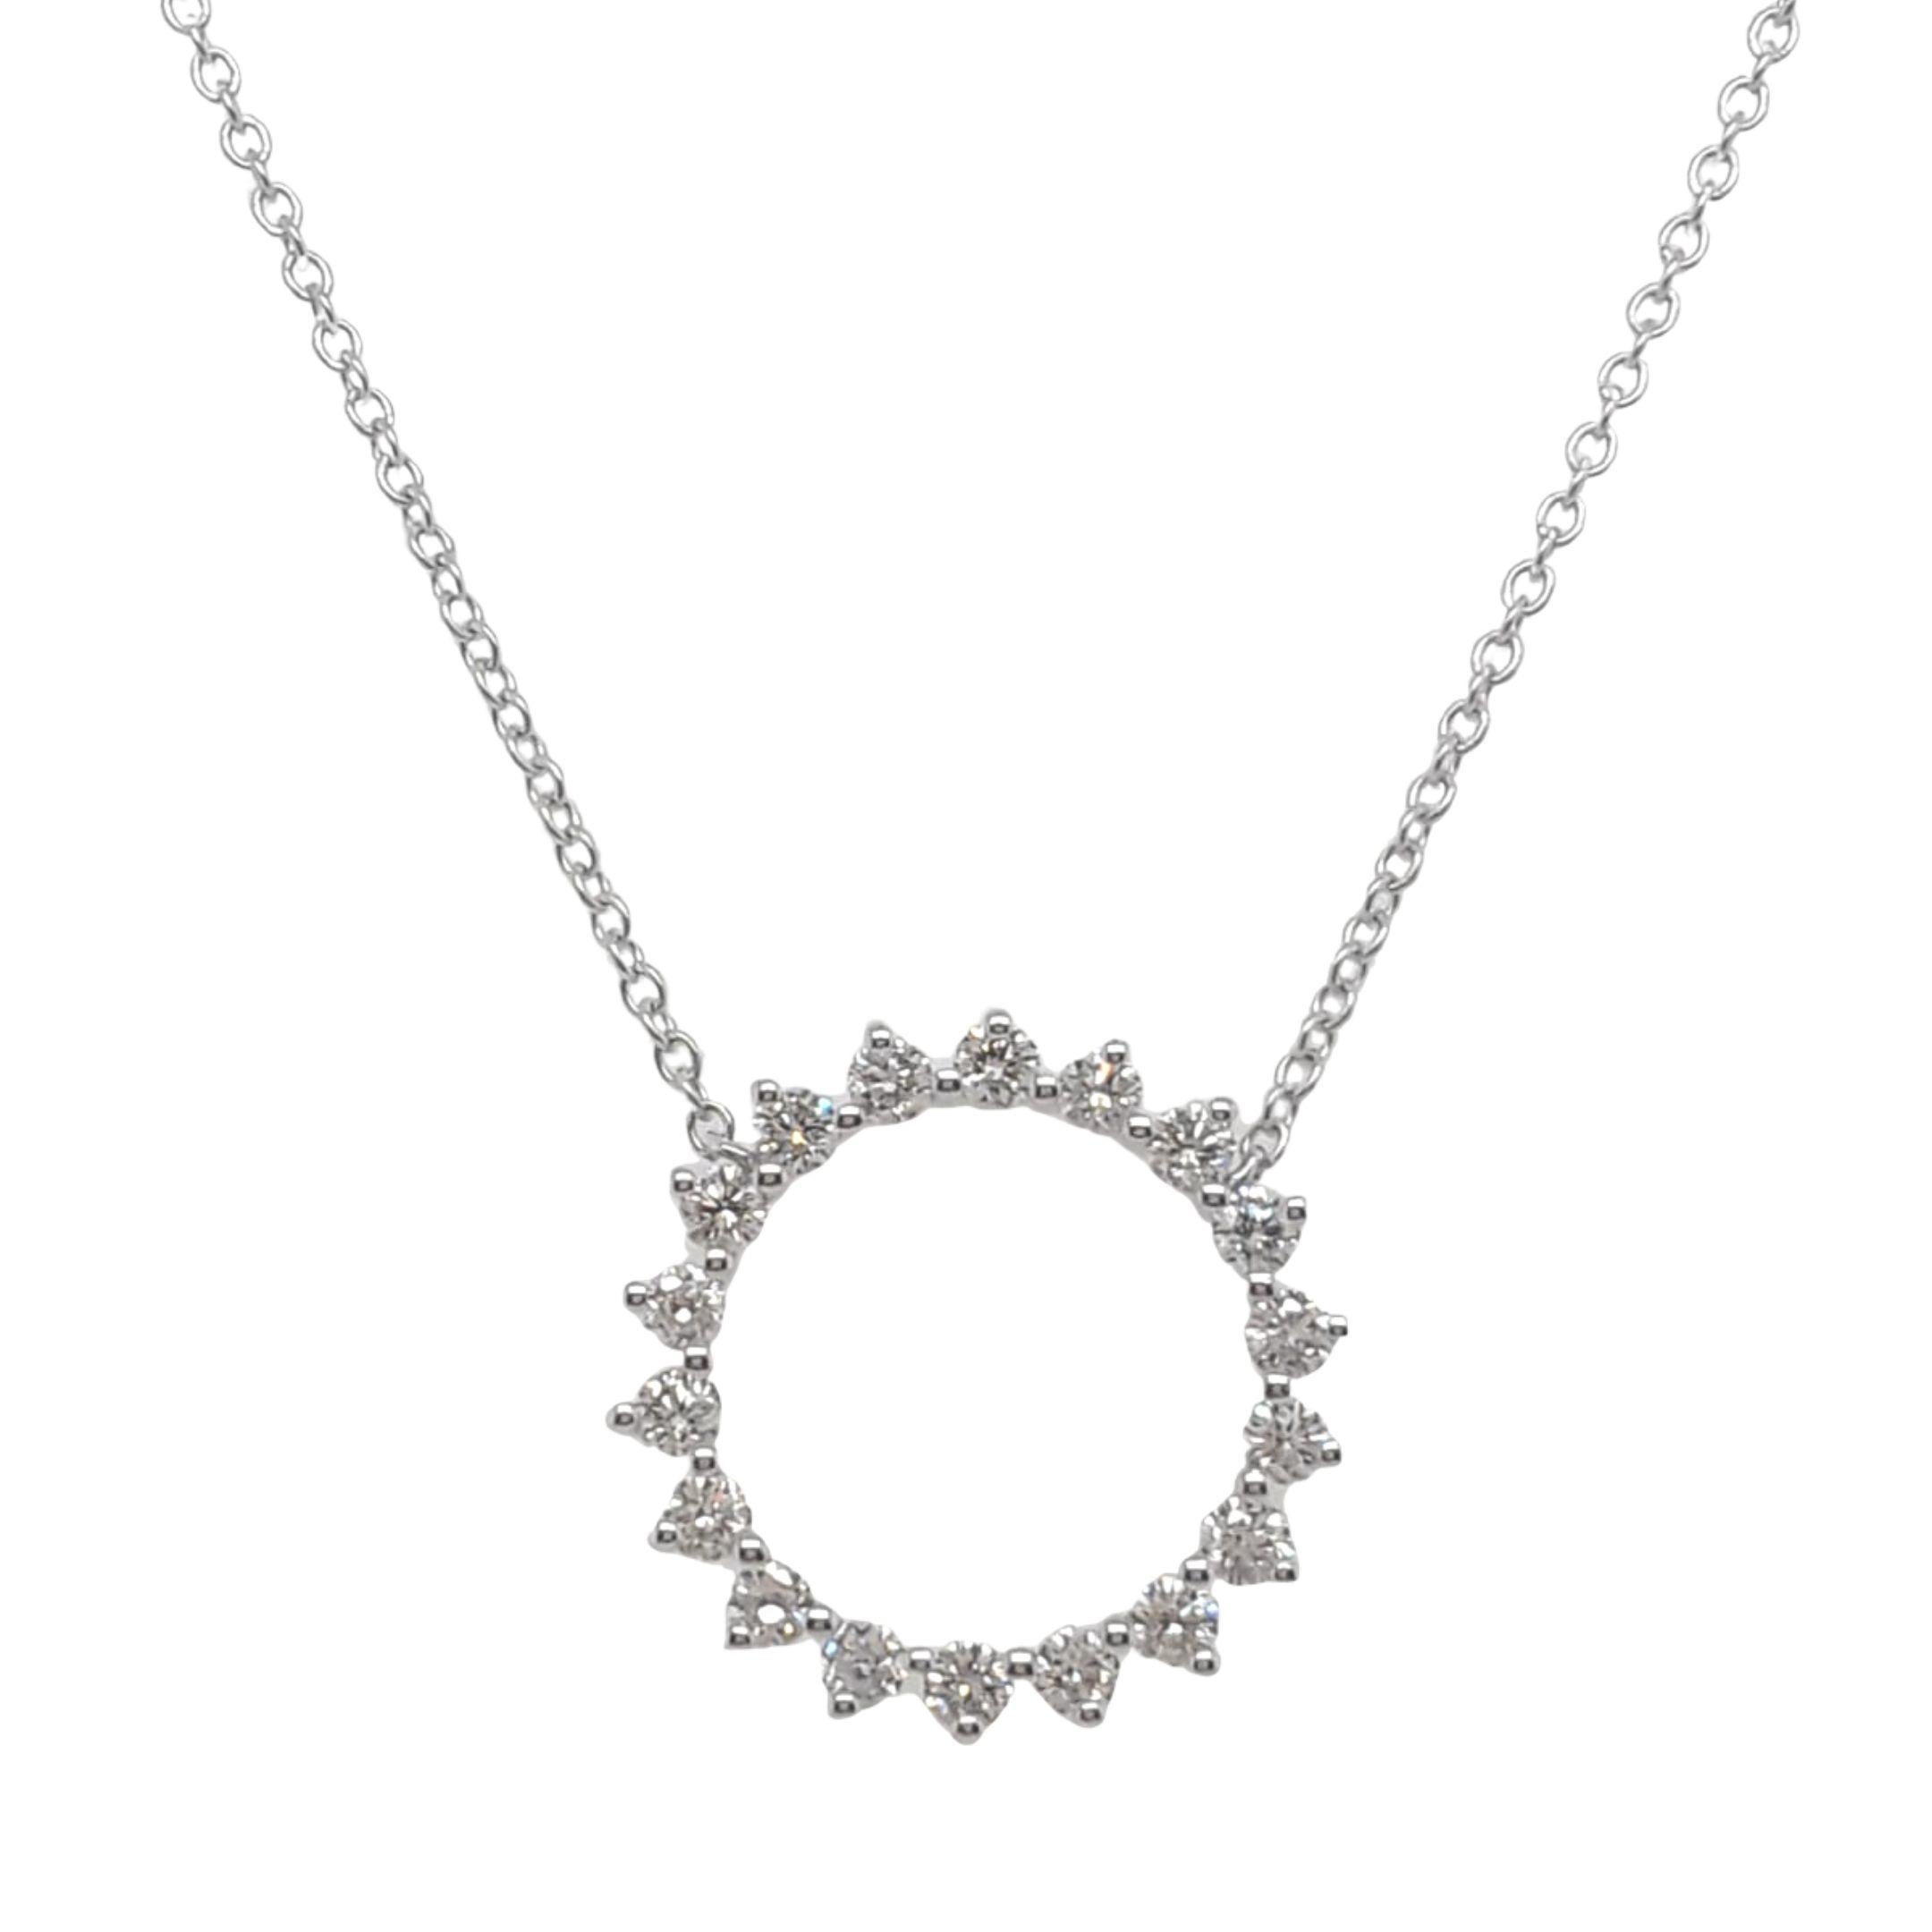 Circle Diamond Pendant Necklace made with real/natural brilliant cut diamonds. Diamond Weight: 0.53 carats, Diamond Quantity: 18 round diamonds. Mounted on 18 karat white gold.